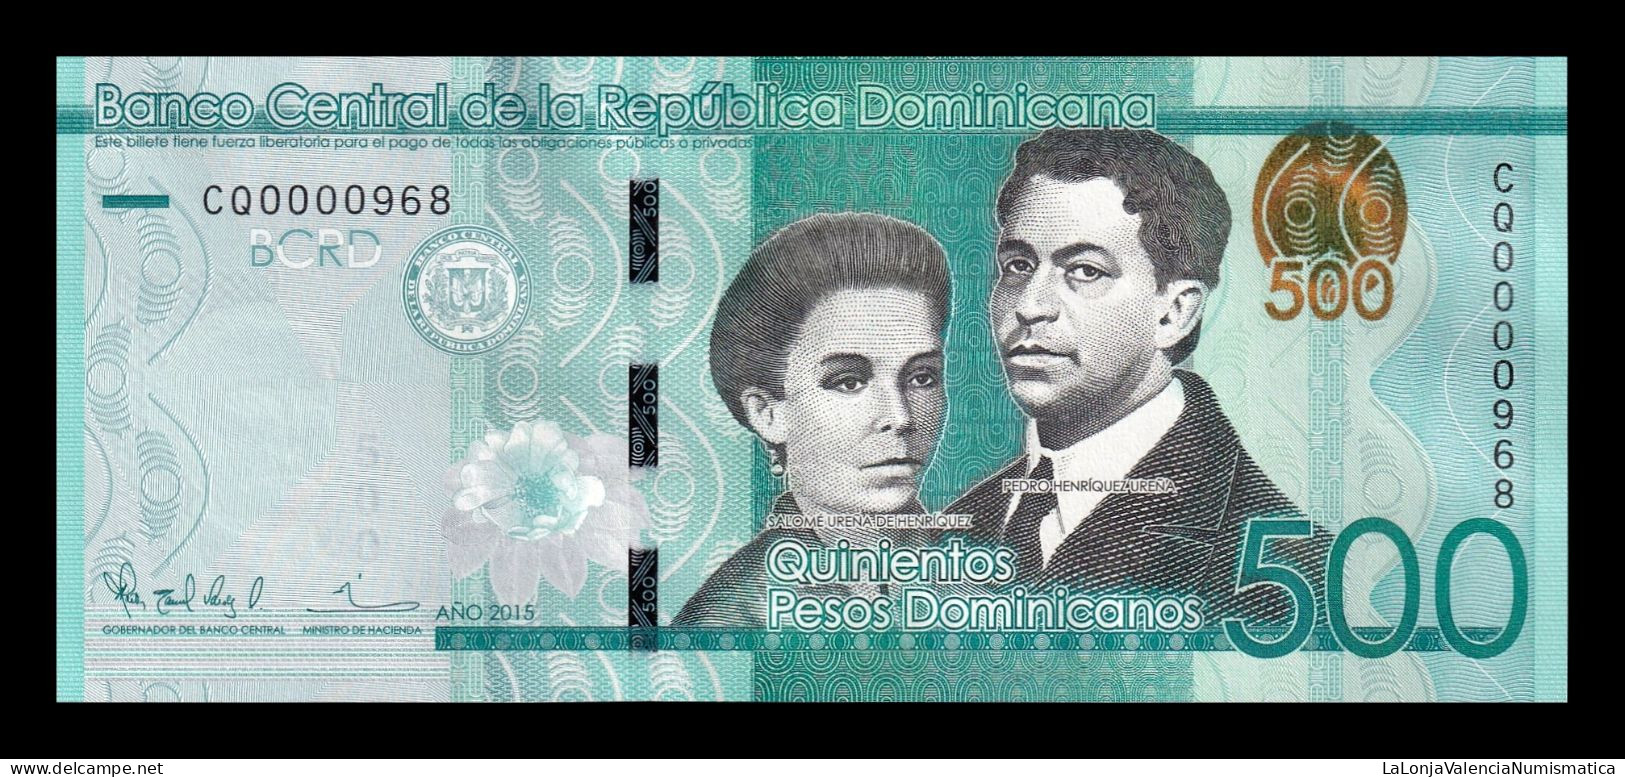 República Dominicana 500 Pesos Dominicanos 2015 Pick 192b Low Serial 968 Sc Unc - Dominicana